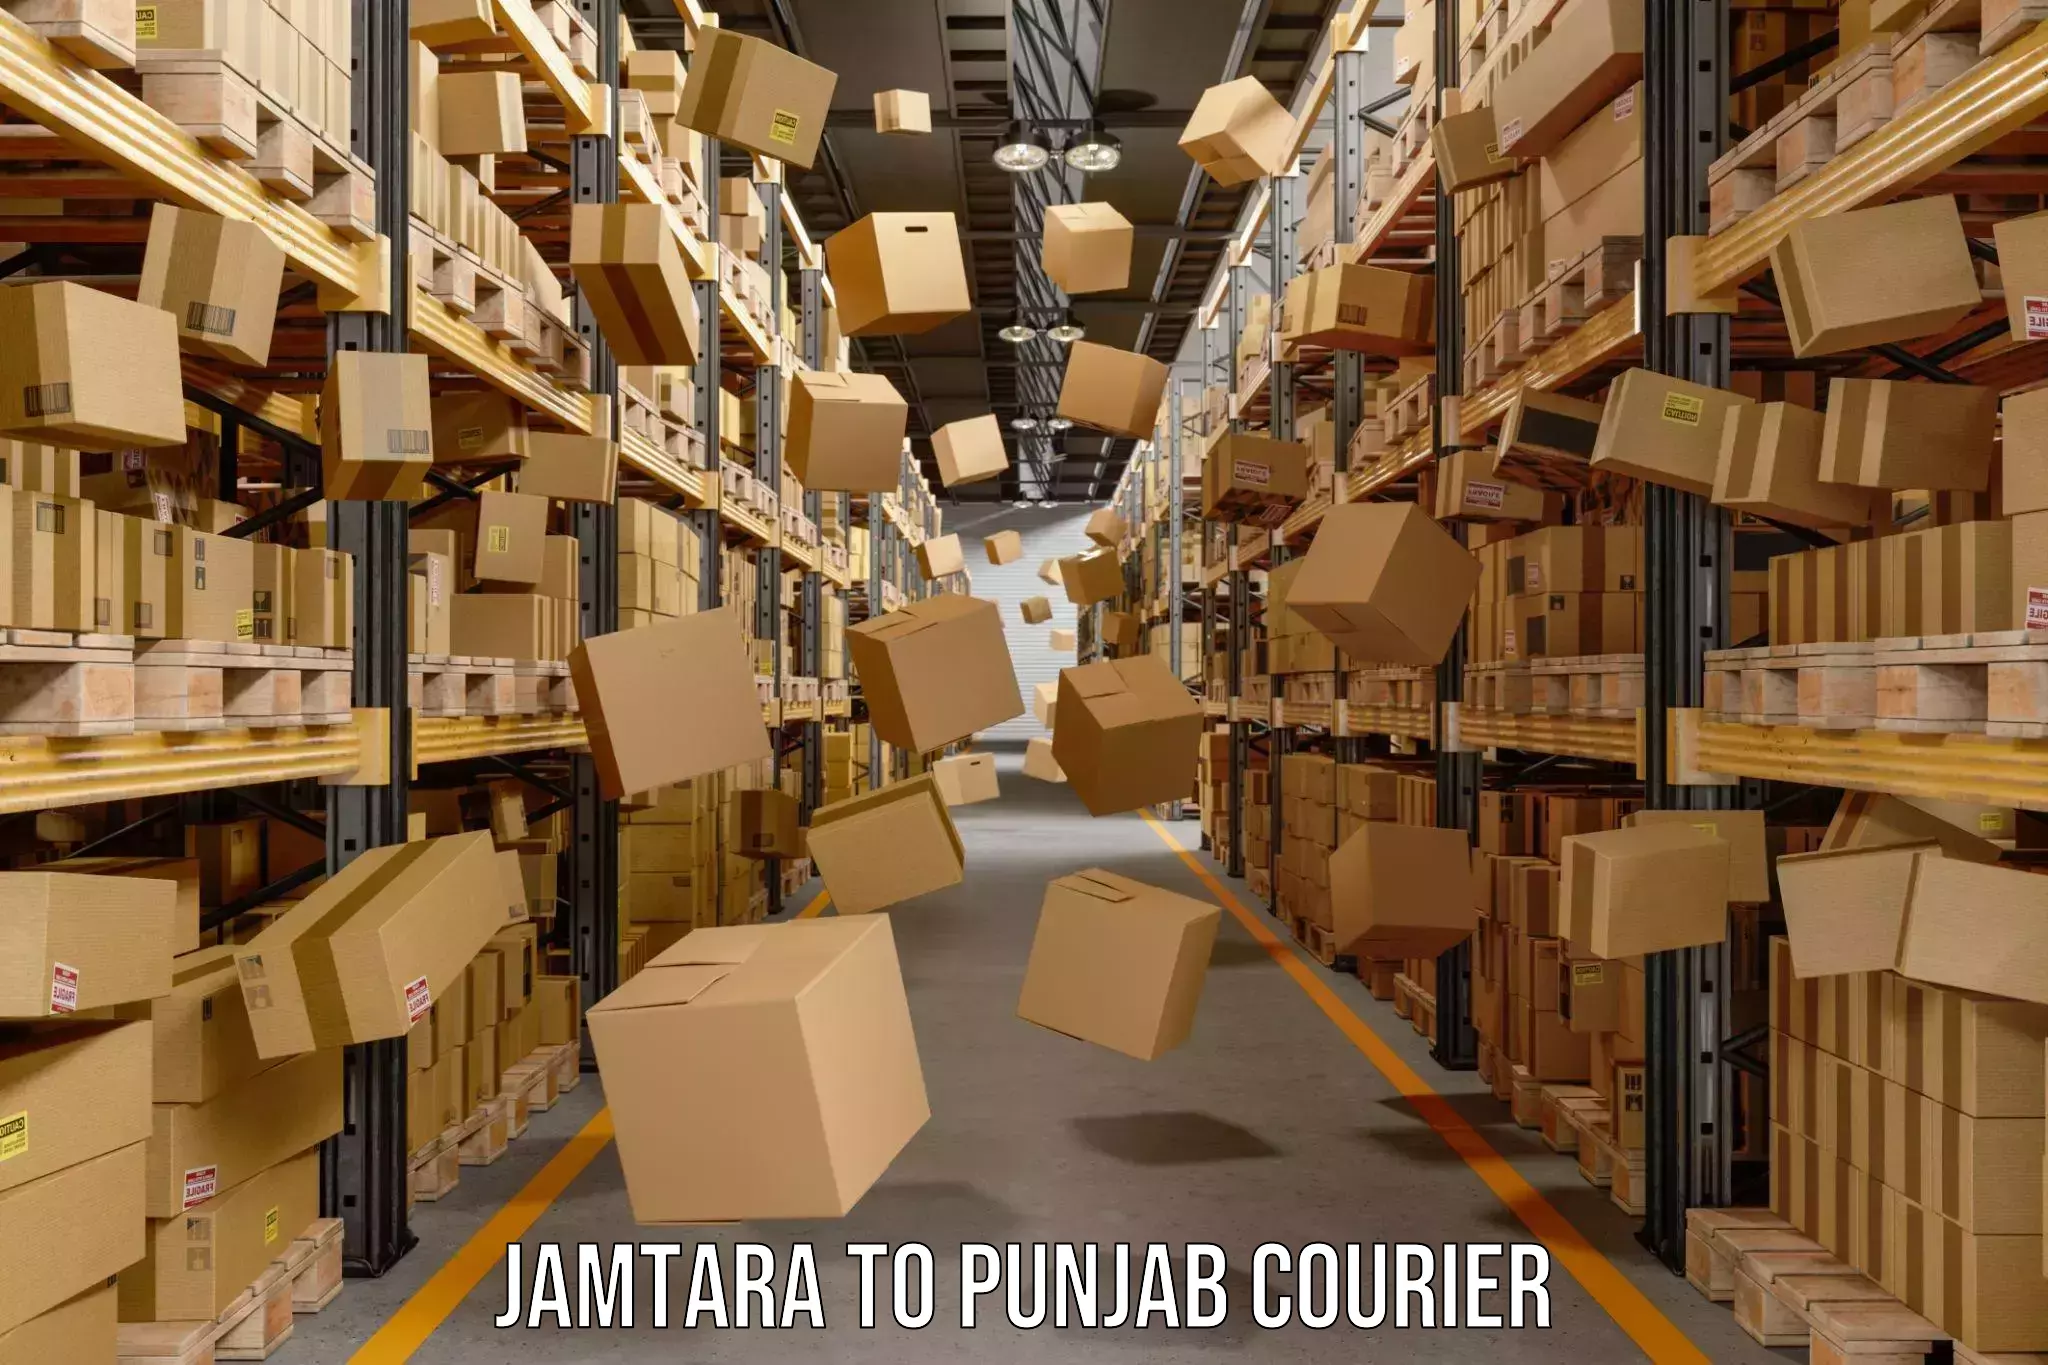 Advanced shipping network Jamtara to Amritsar